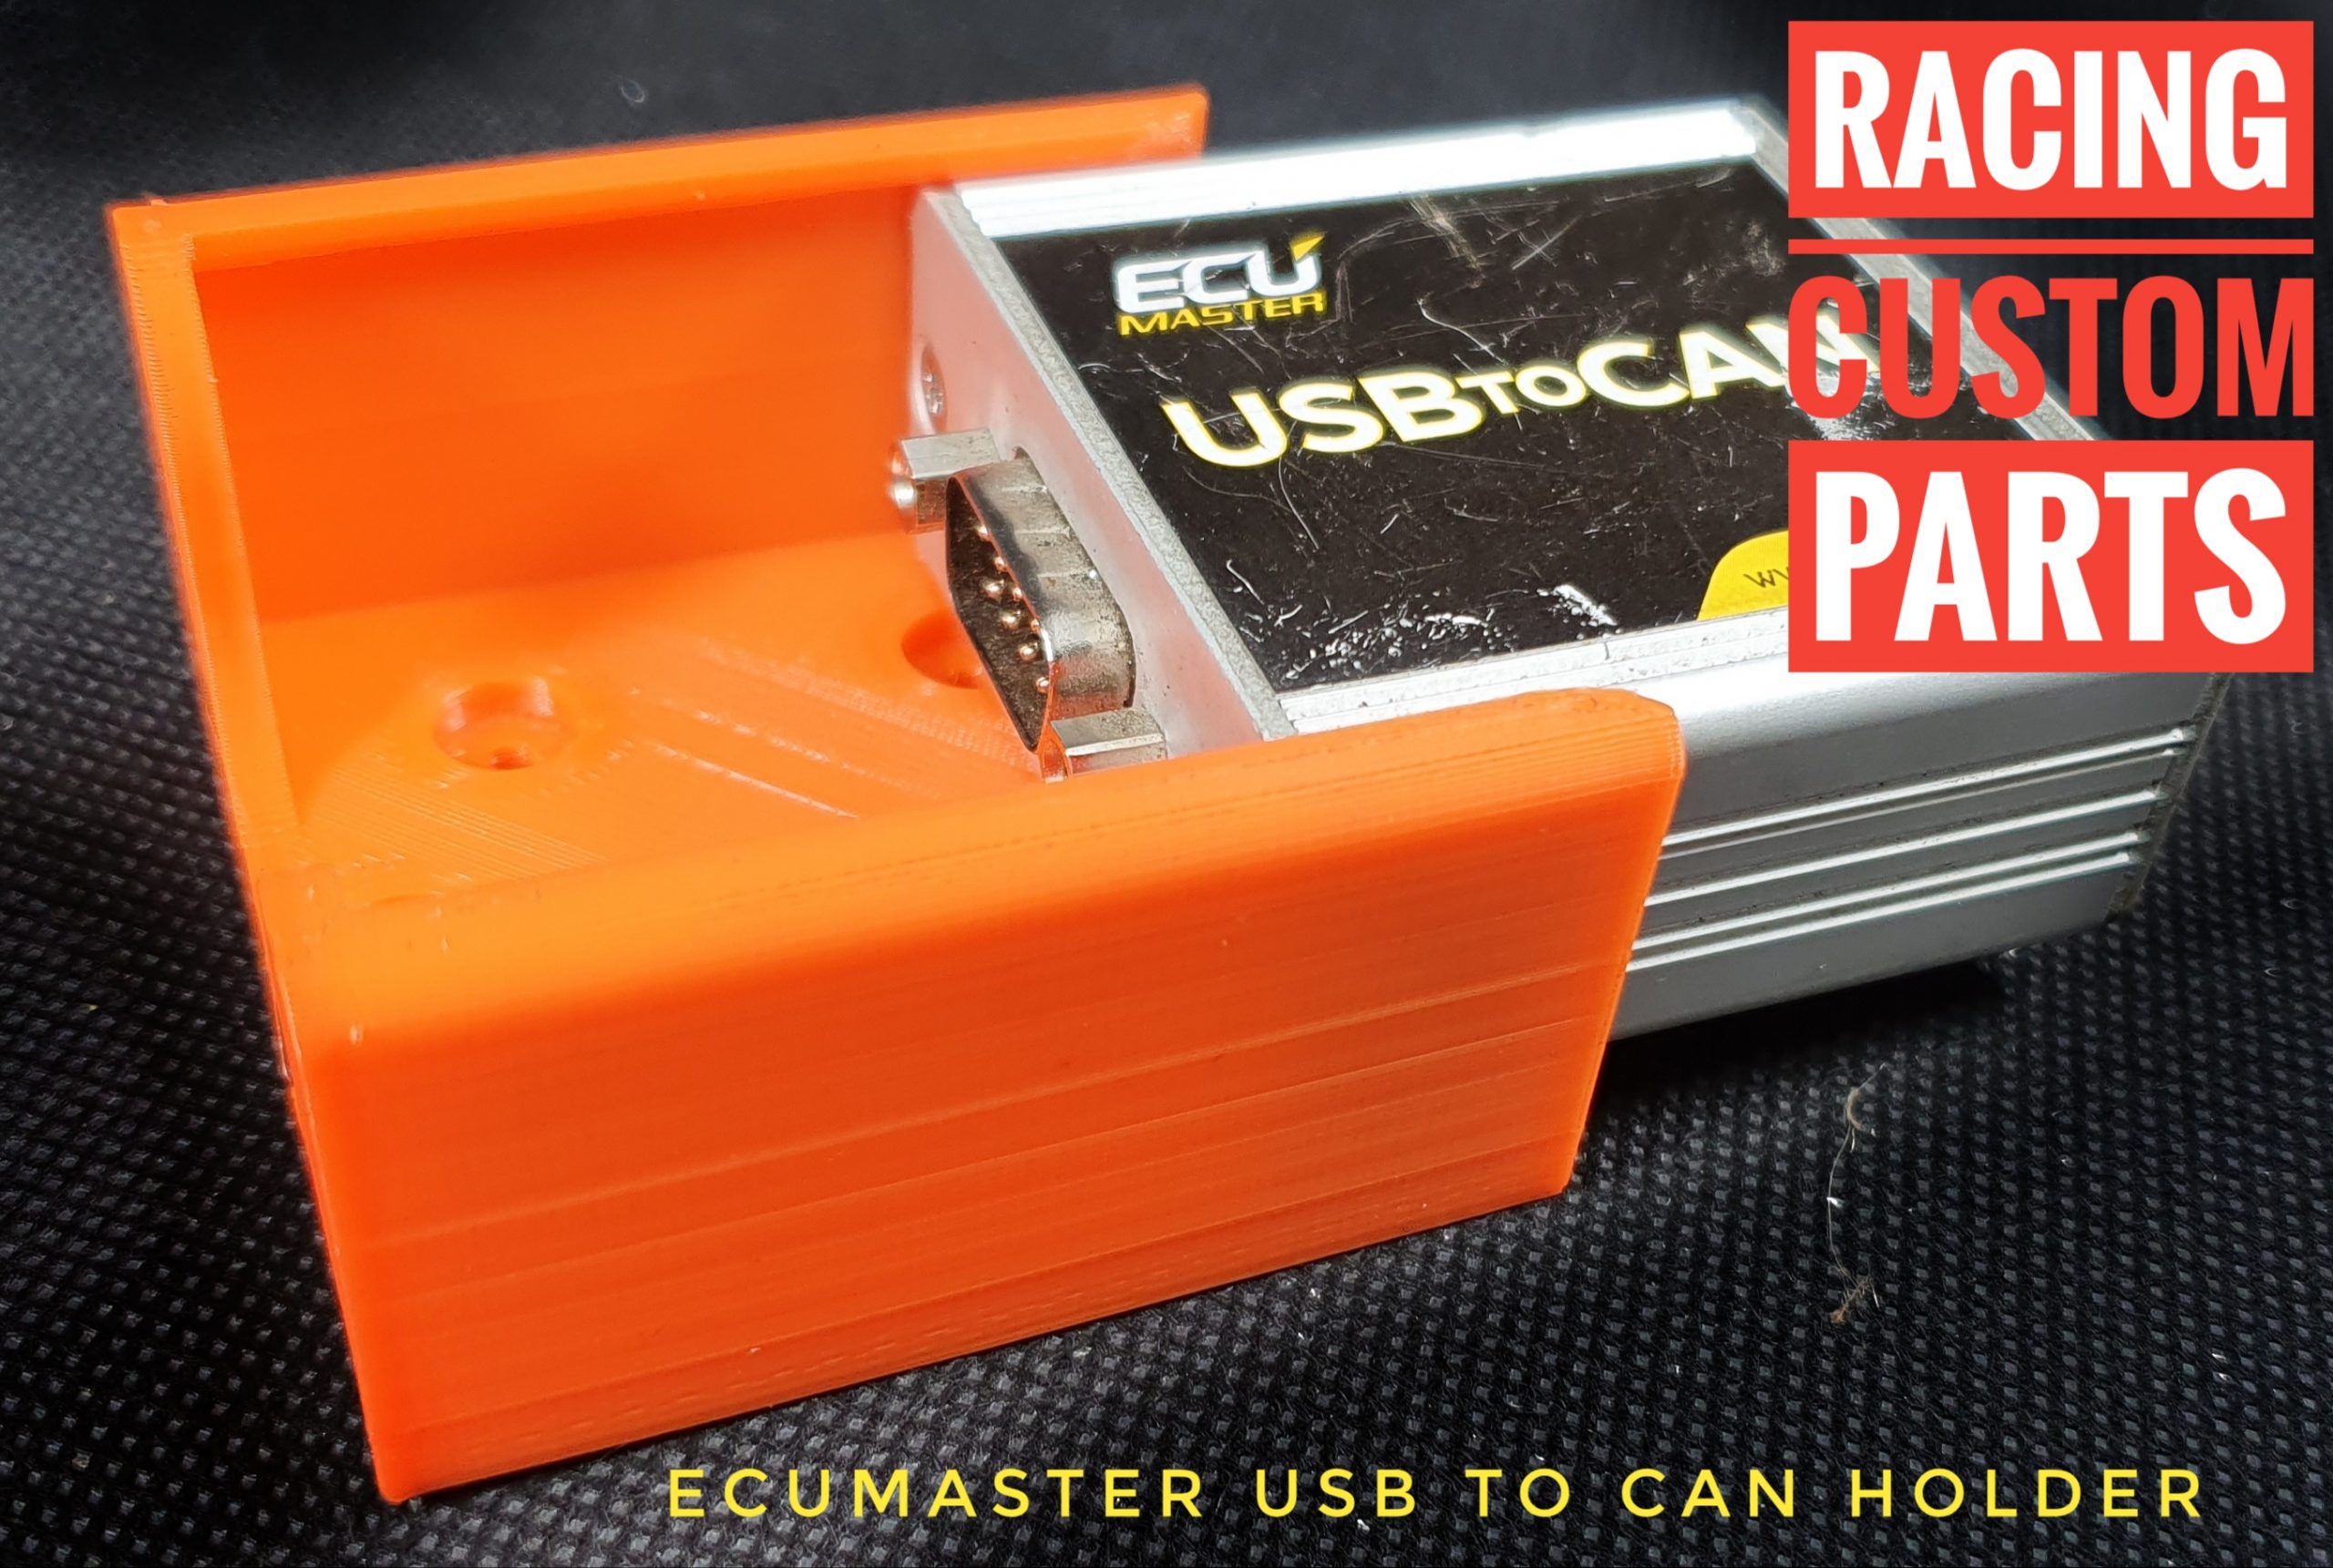 Ecumaster usb to can holder racing custom parts 3d printed parts